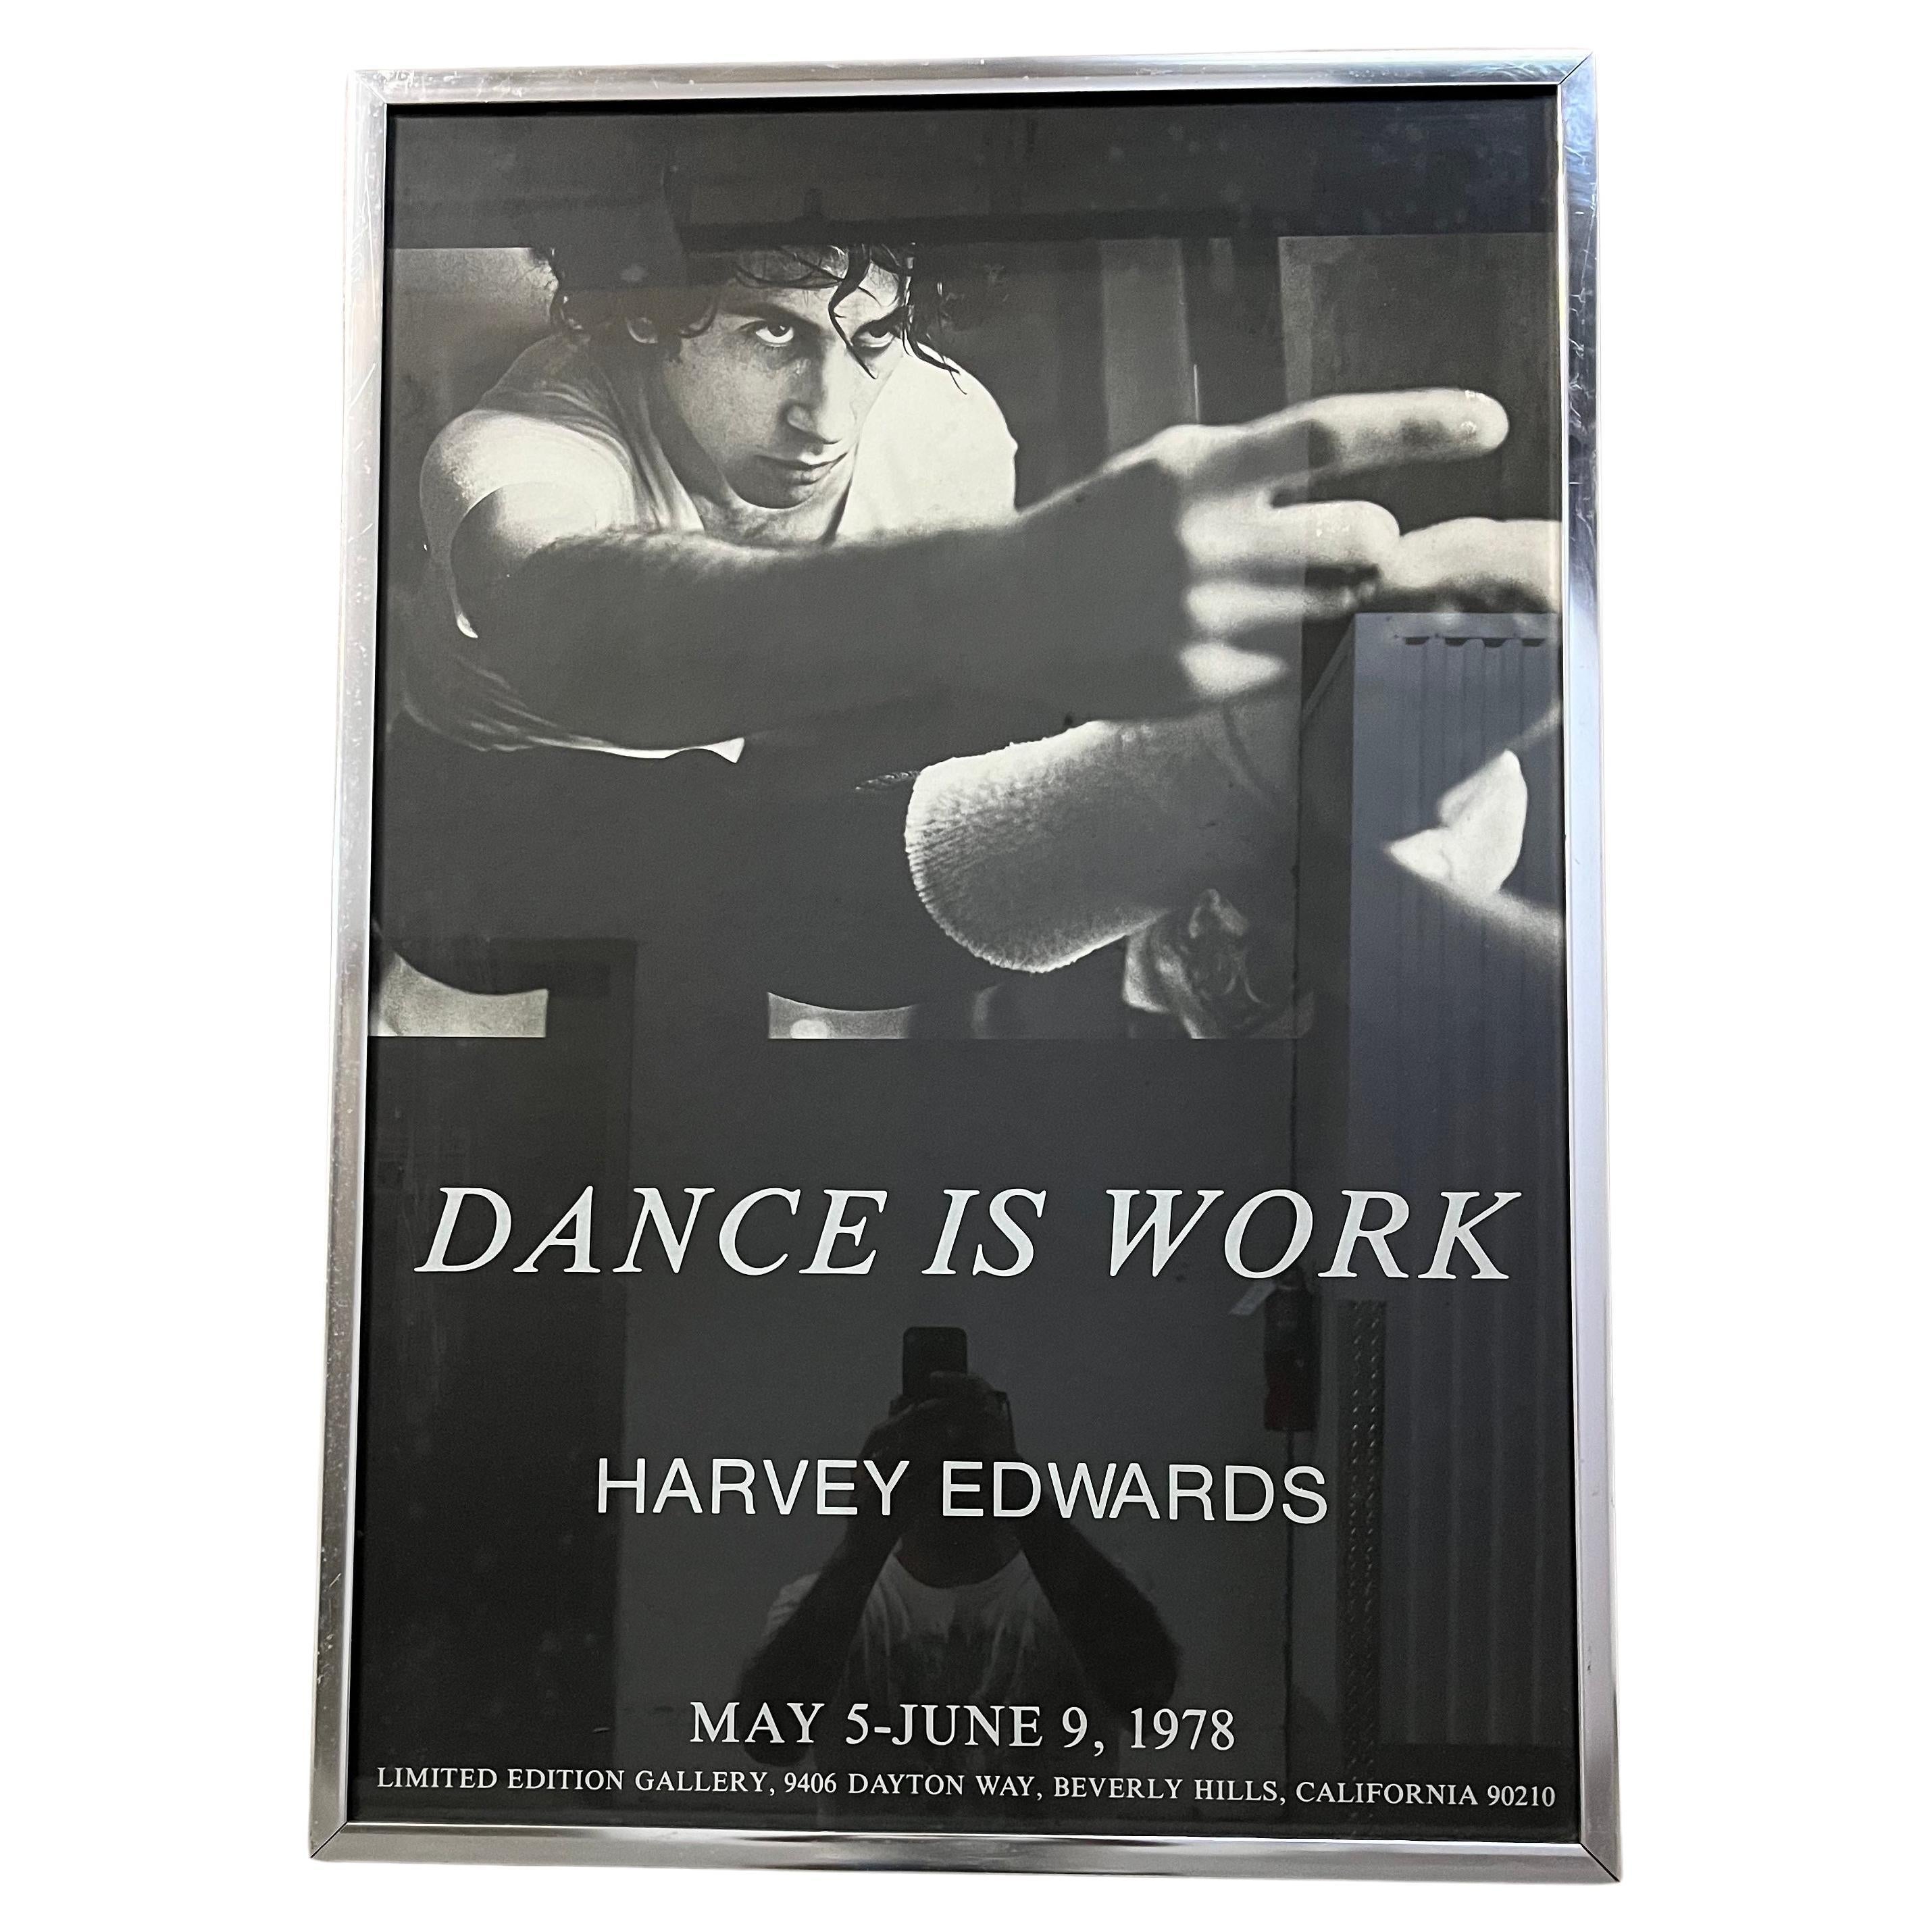 Original gerahmtes Harvey Edwards Dance Is Work Ausstellungsplakat. Ab 1978